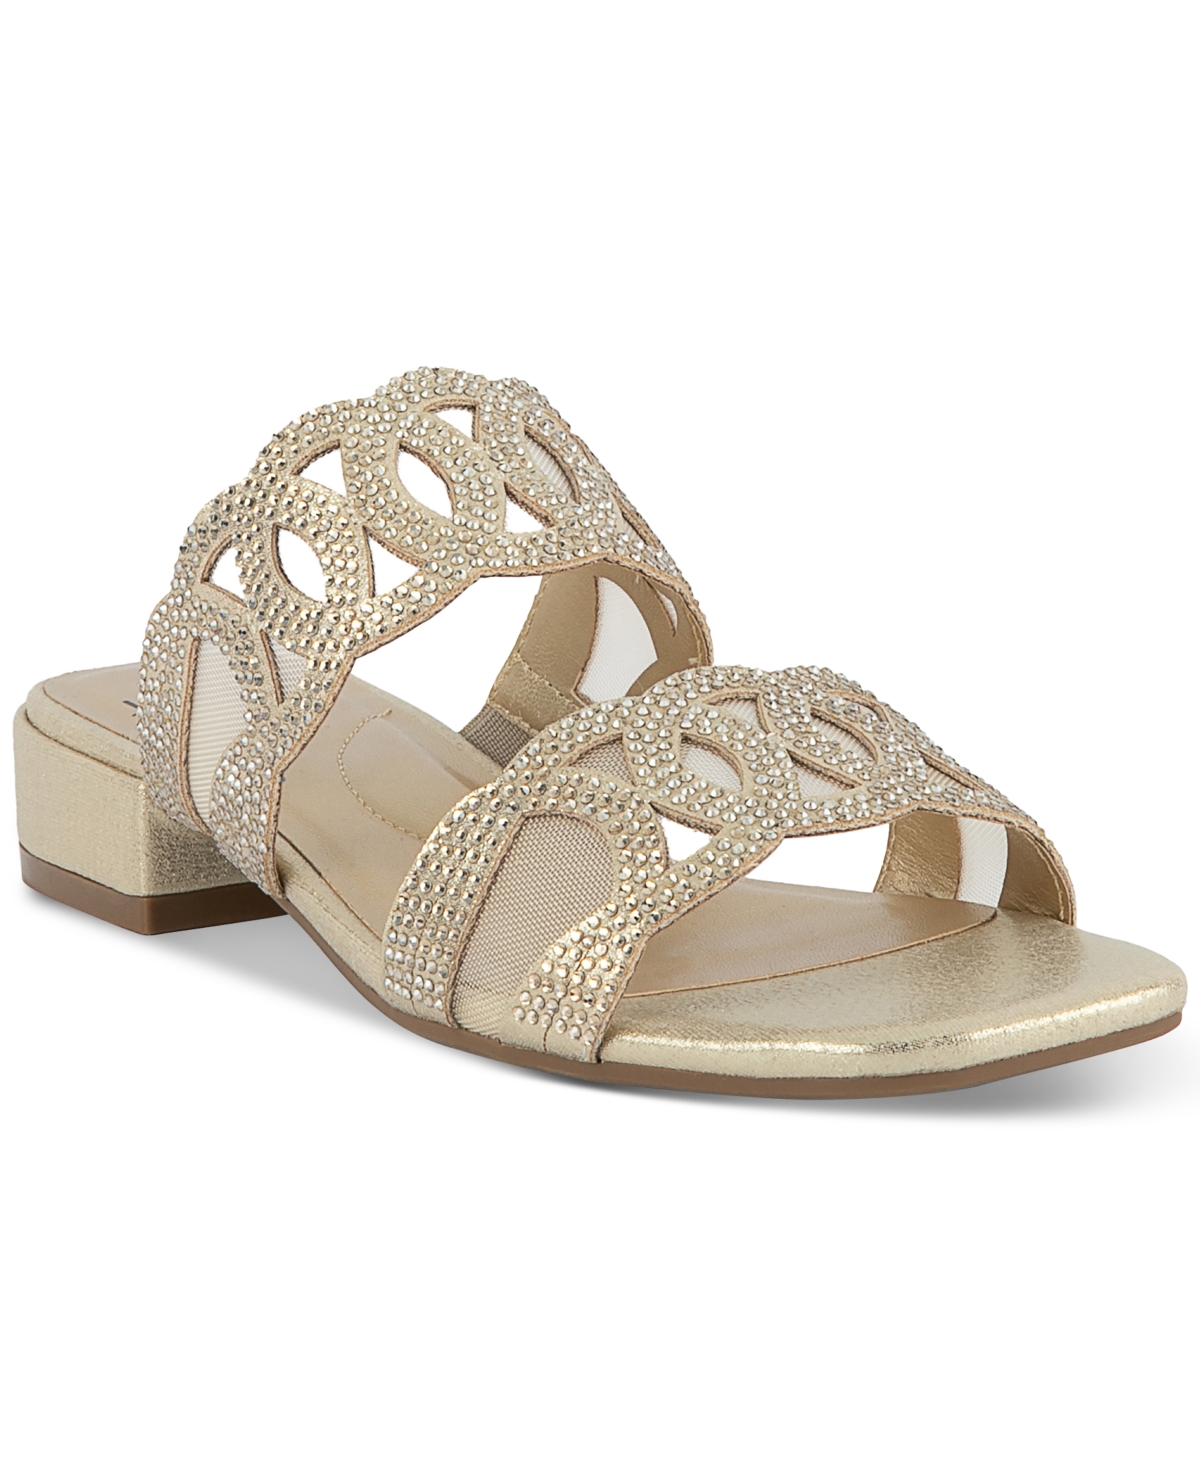 Vandela Slip-On Cutout Sandals, Created for Macy's - Light Gold